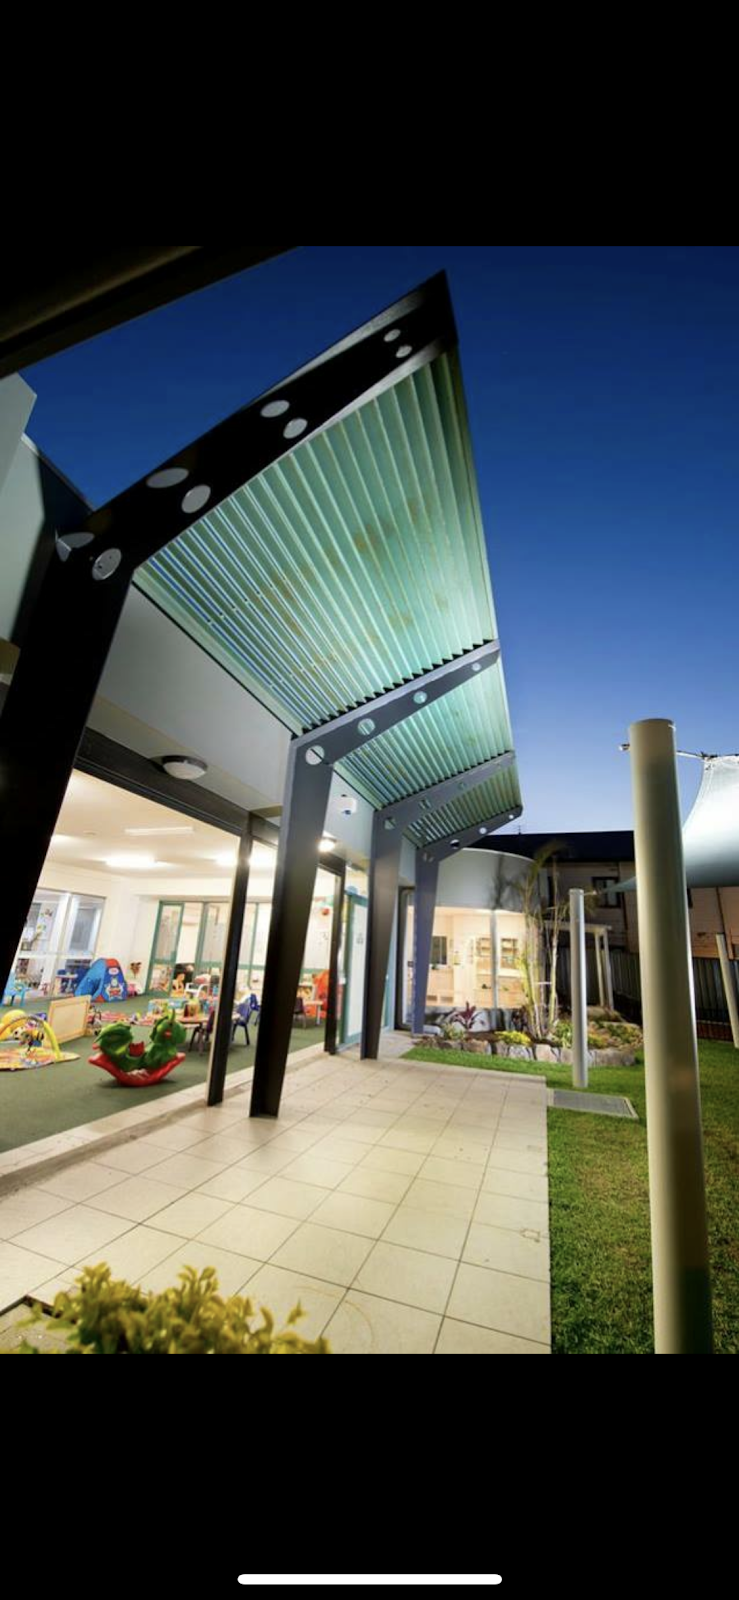 Tillys Play & Development Centre Waratah 2 | school | 42 Station St, Waratah NSW 2298, Australia | 0249677399 OR +61 2 4967 7399